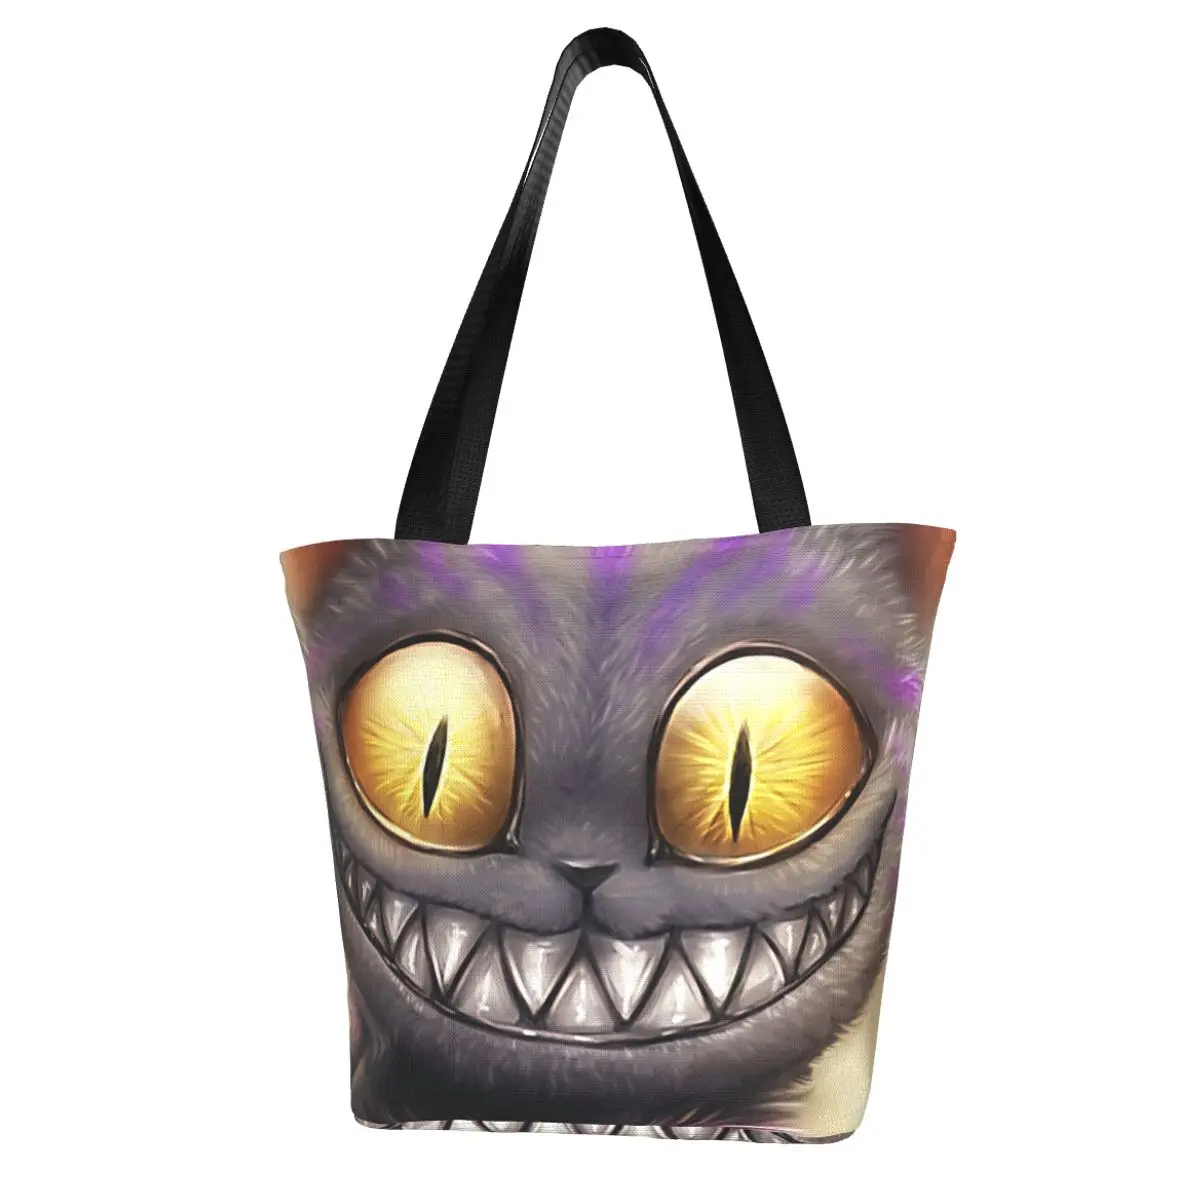 Alice In Wonderland Shopping Bag Aesthetic Cloth Outdoor Handbag Female Fashion Bags